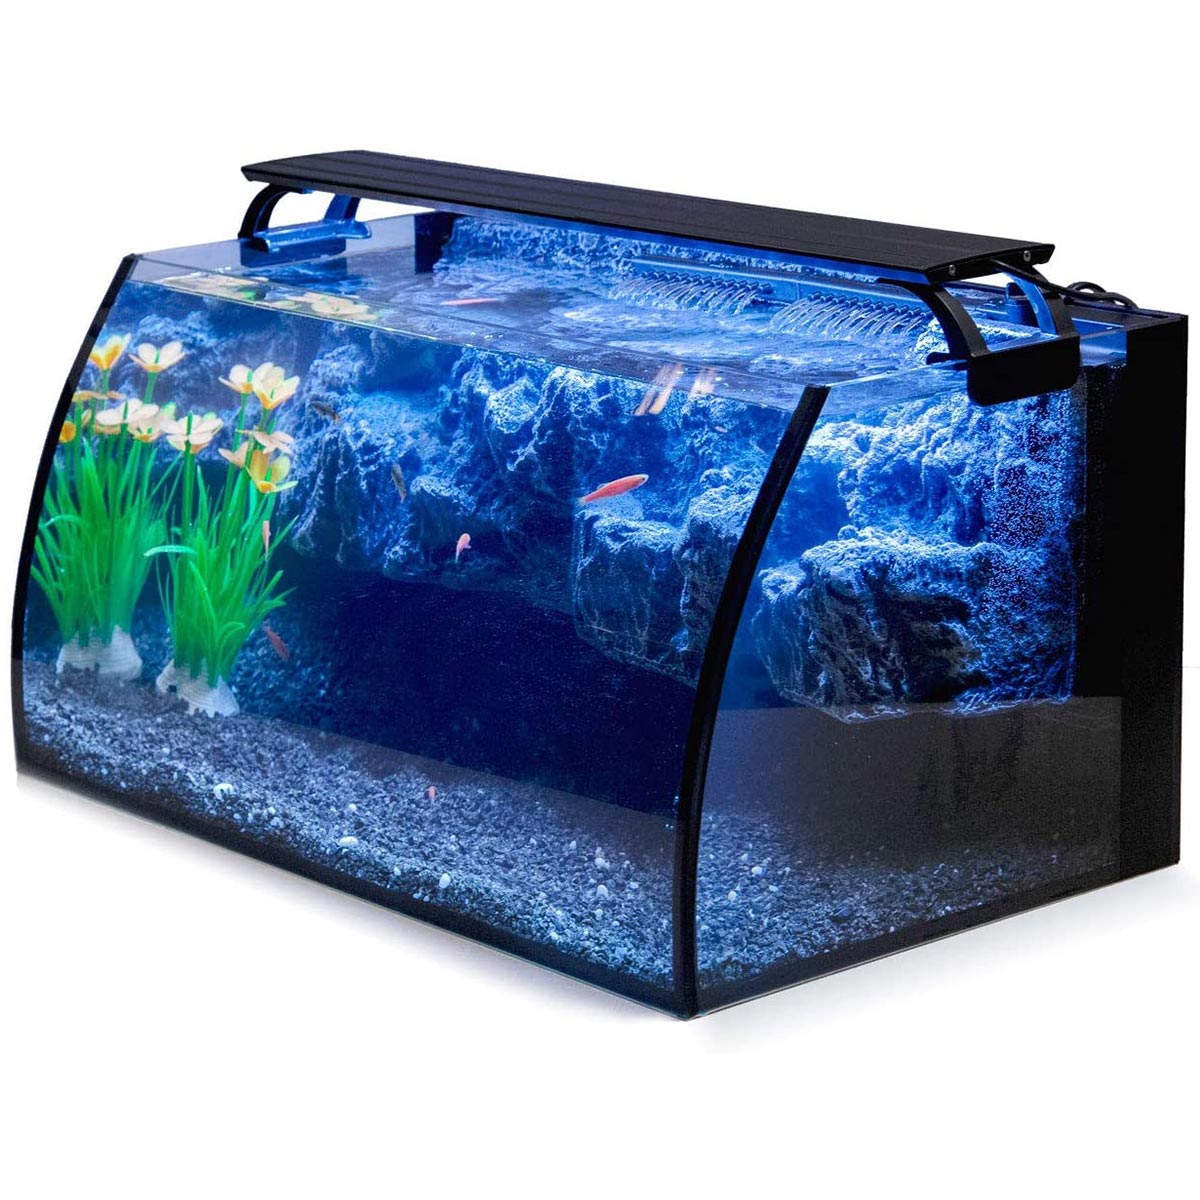 8 gallon fish tank